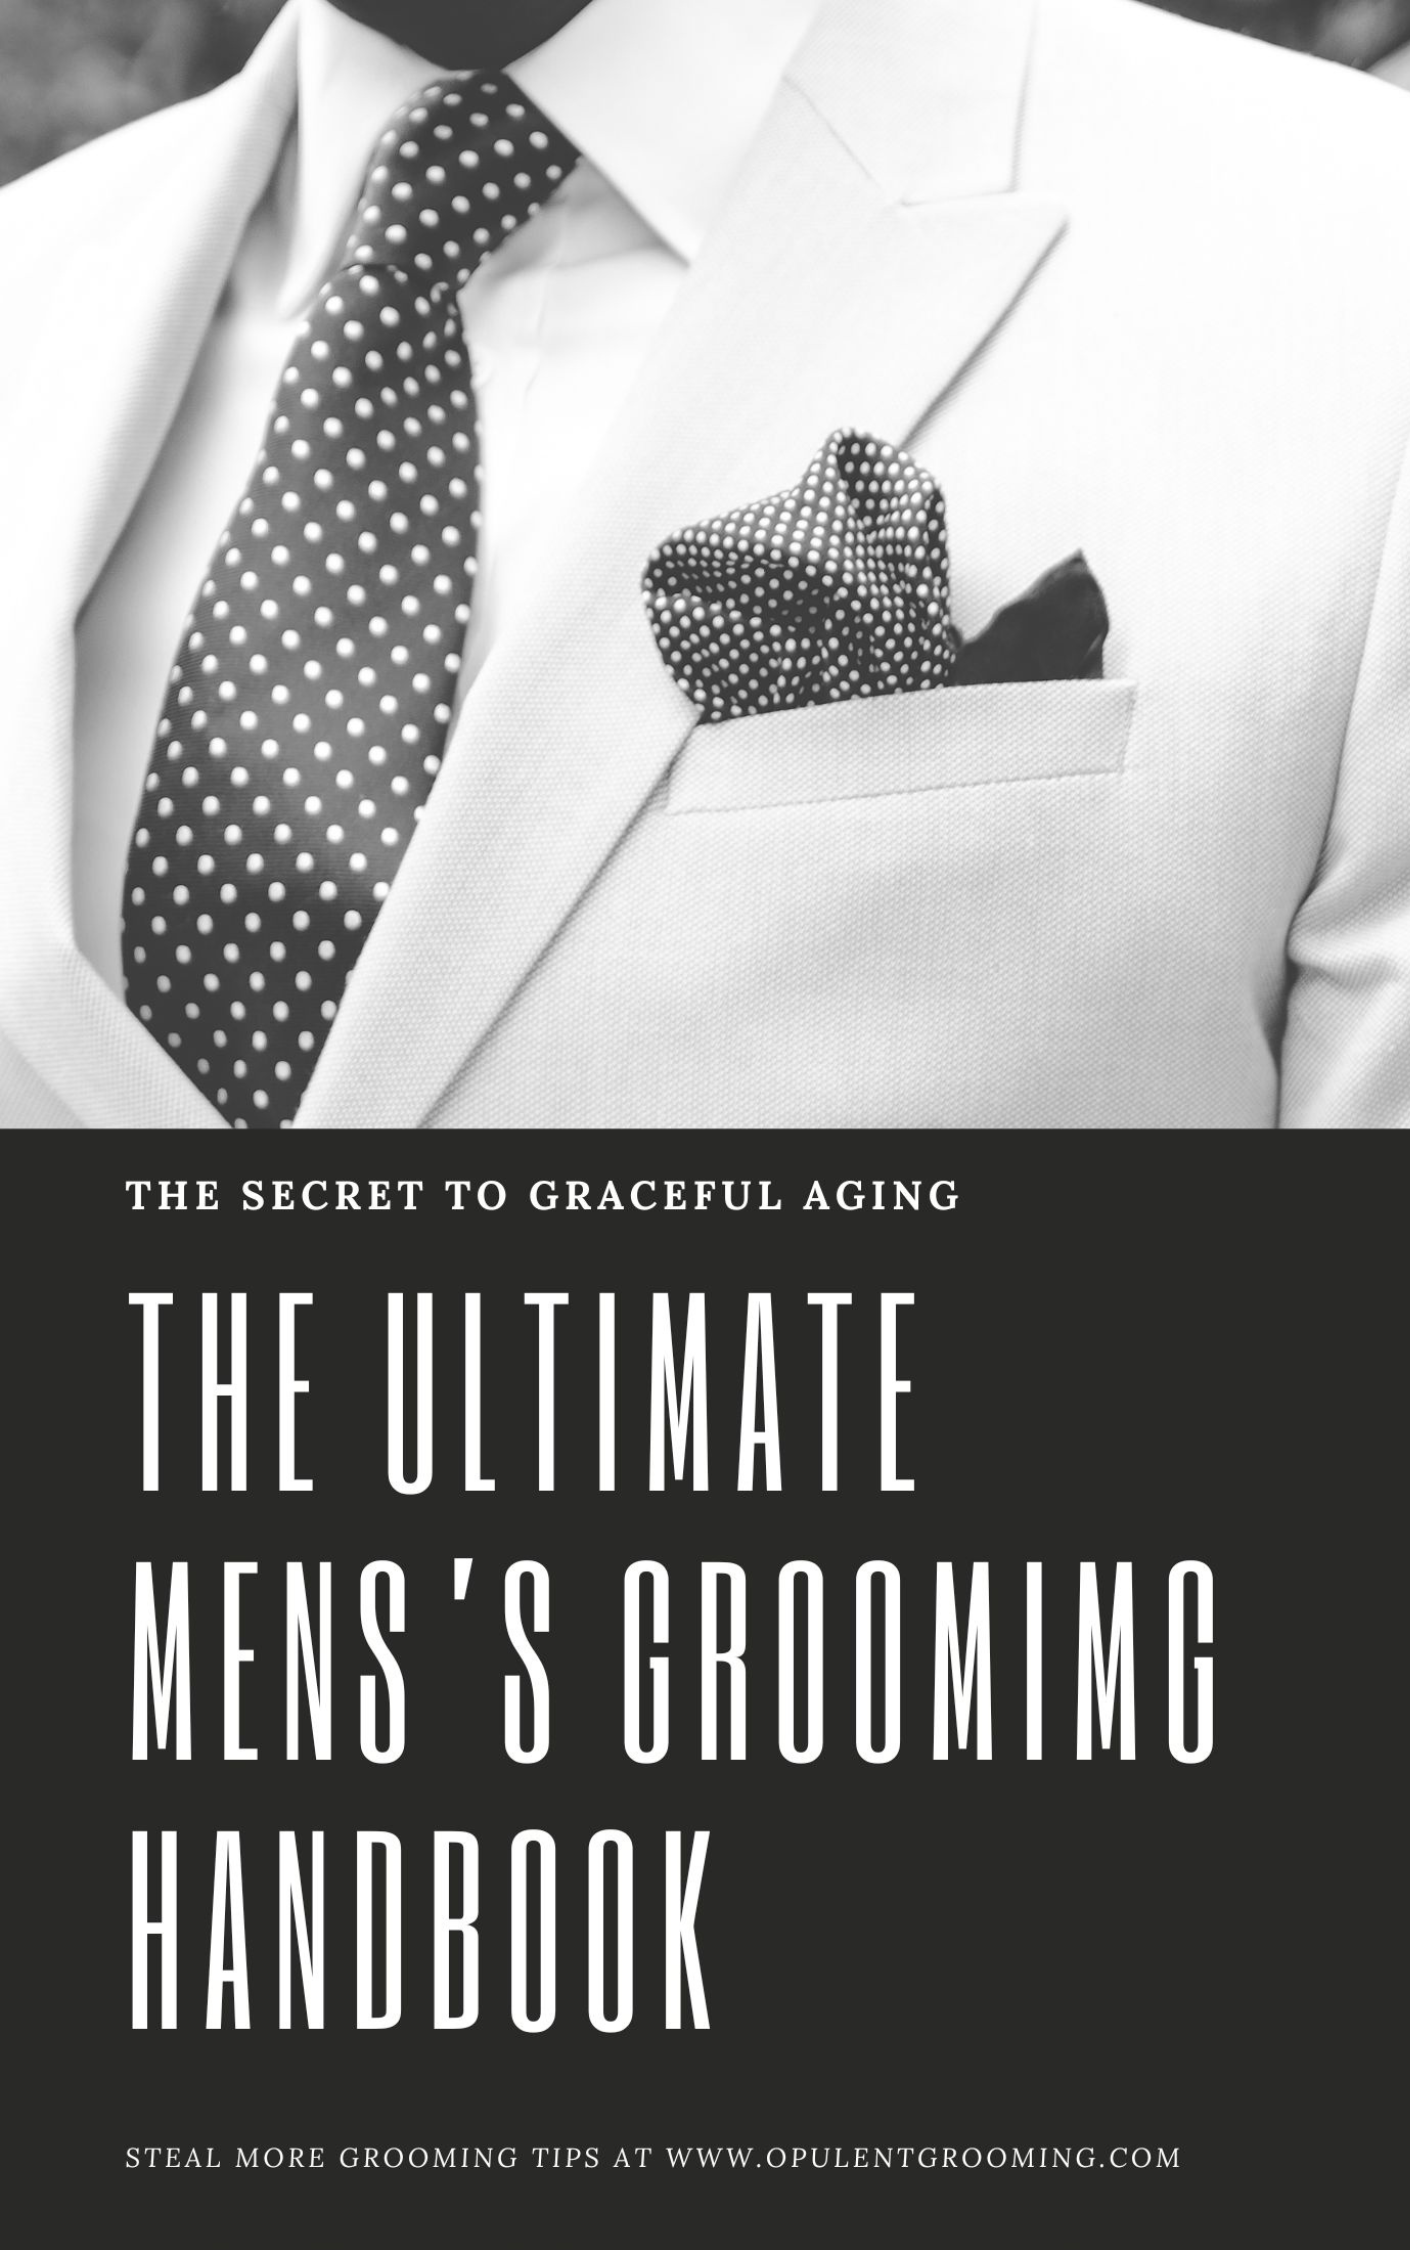 The Ultimate Men's Grooming Handbook - The secrets to graceful aging